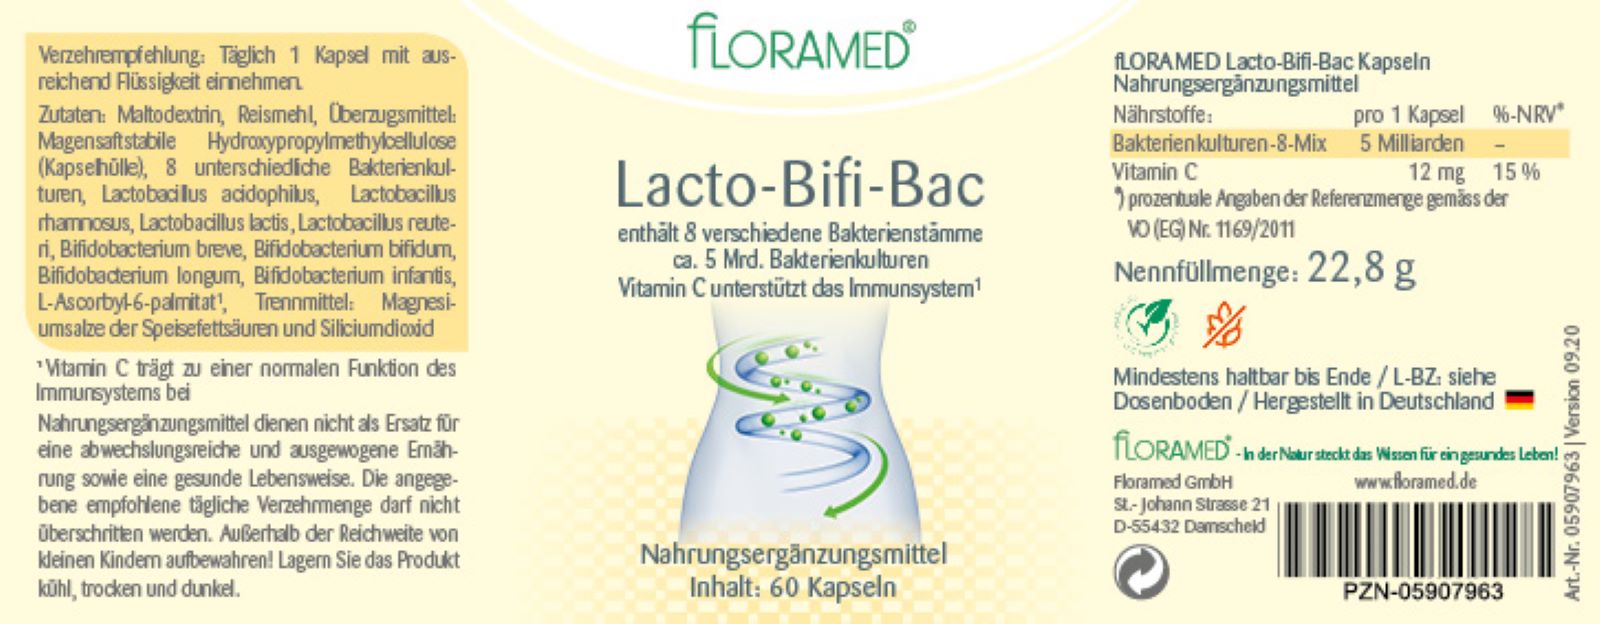 Floramed Lacto-Bifi-Bac